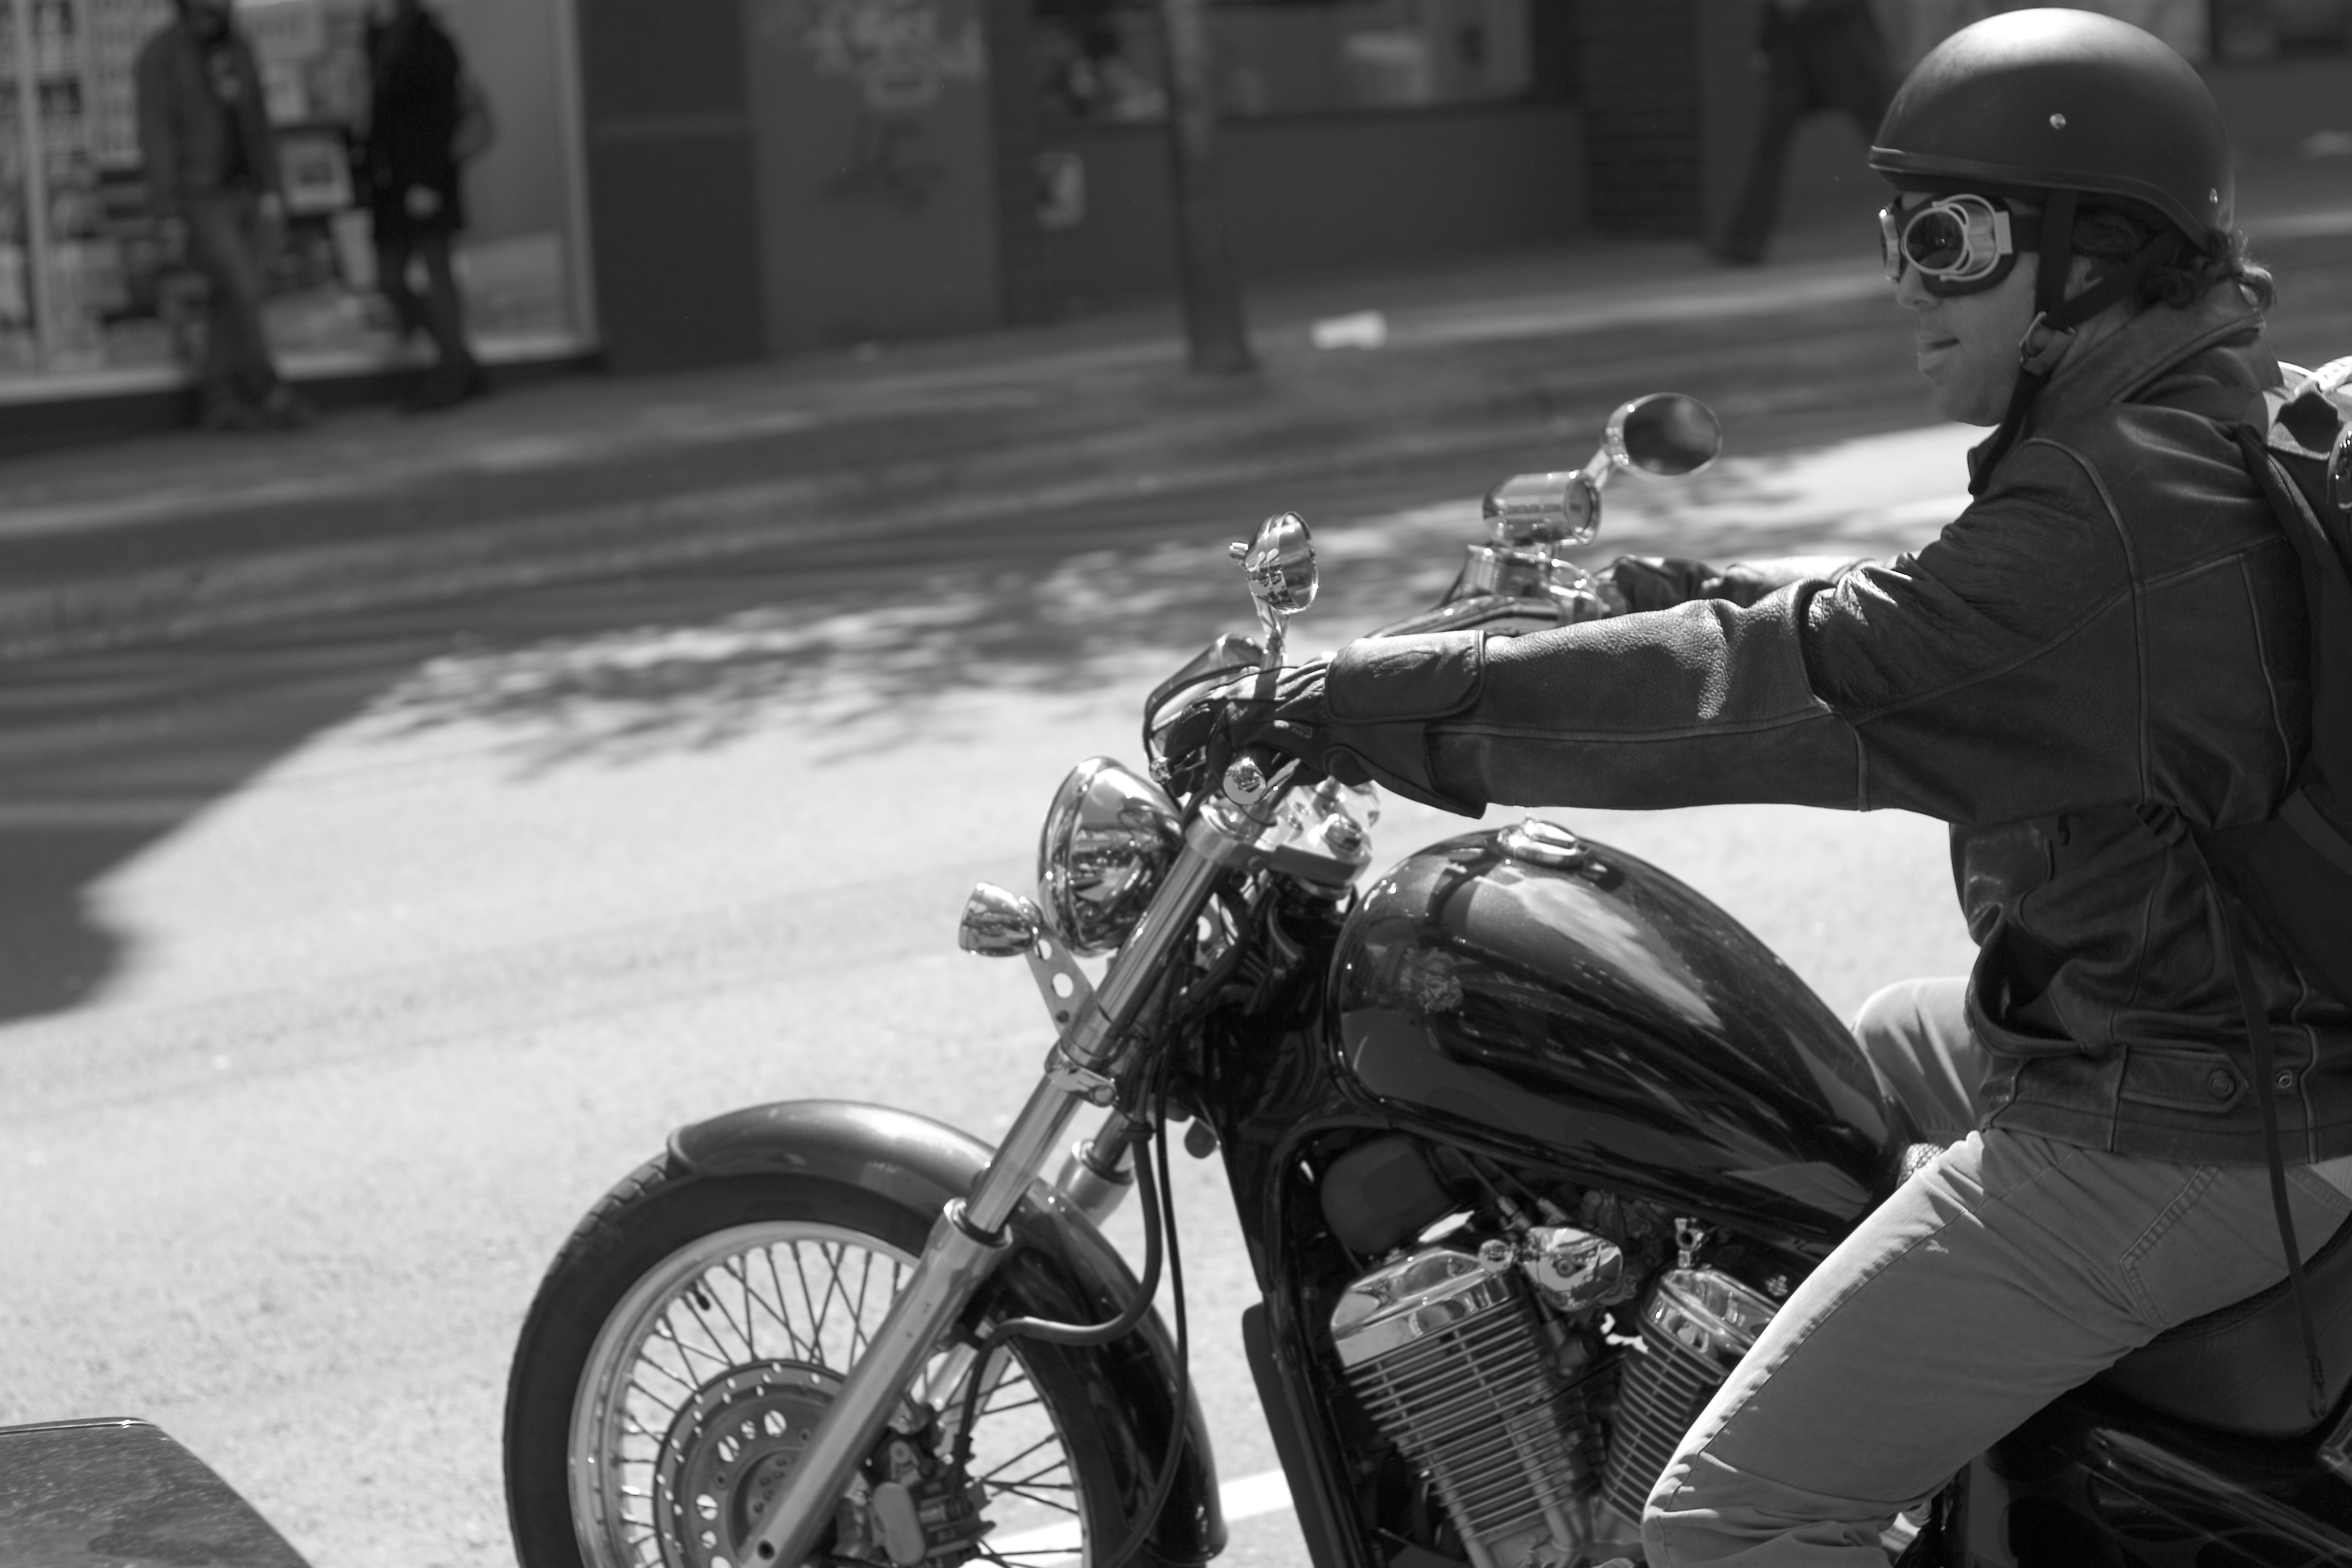 Michael fergusson's honda motorcycle - 7 photo